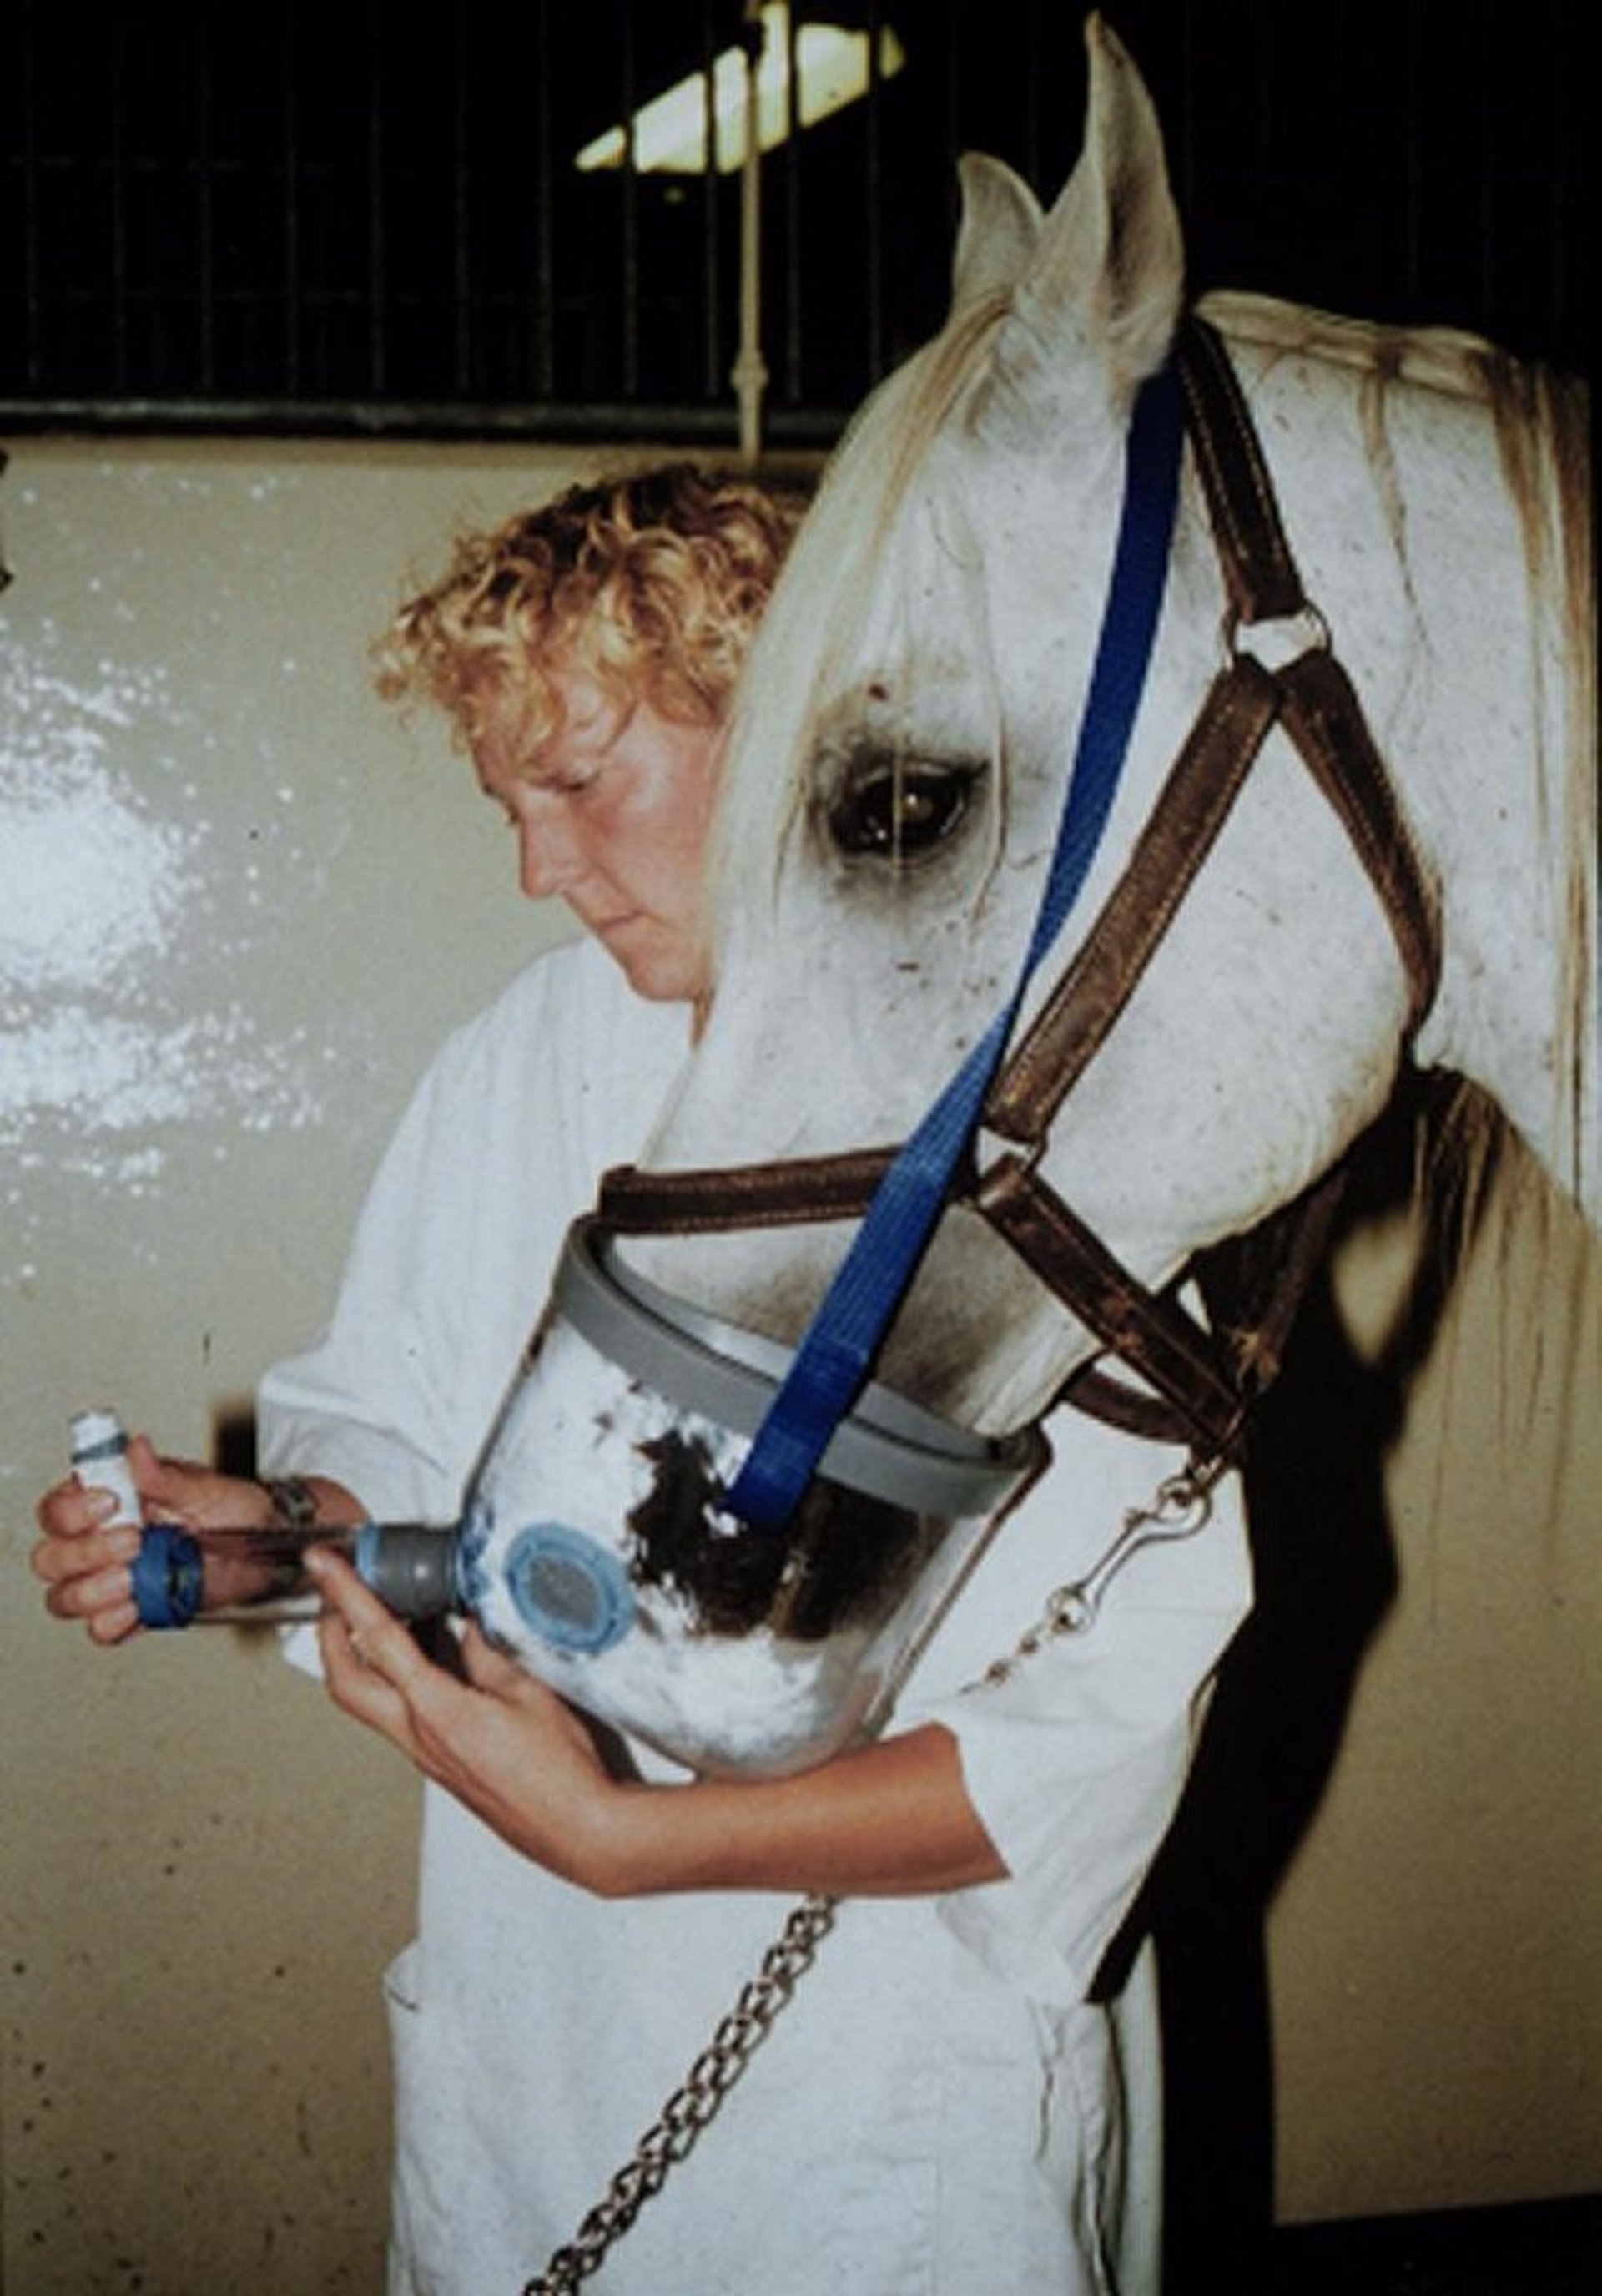 Metered-dose inhaler with spacer, horse